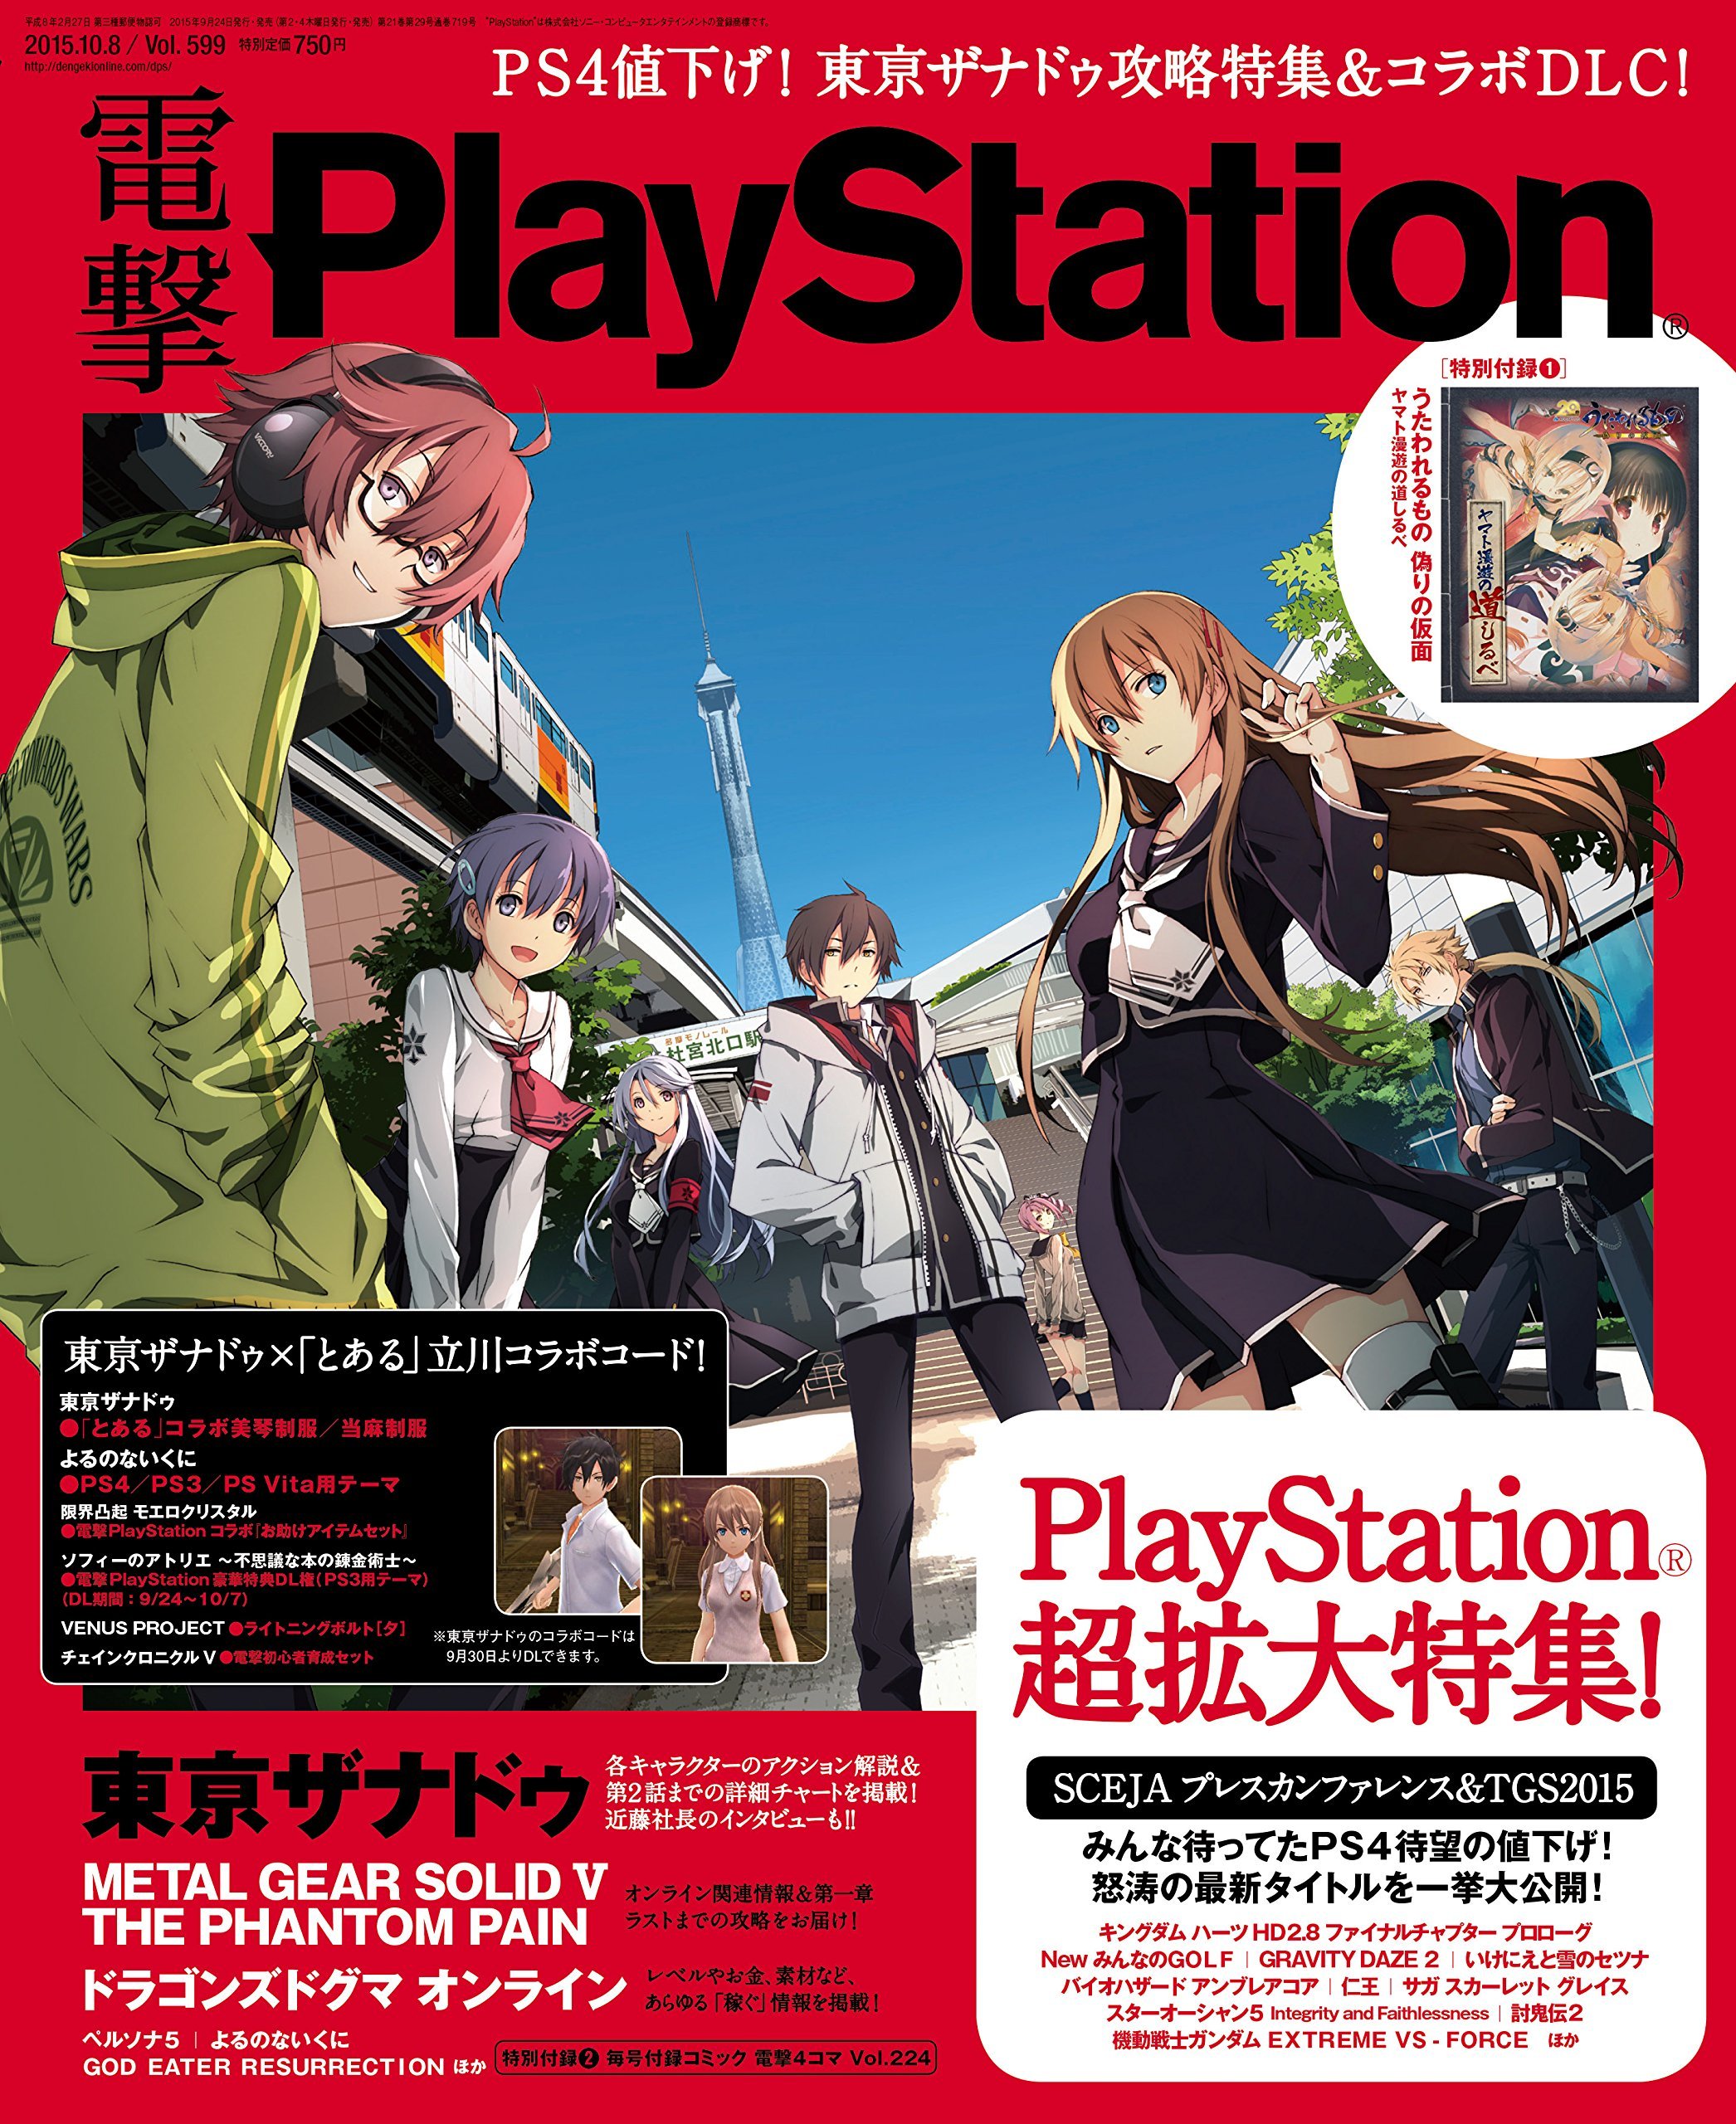 Dengeki Playstation Video Game Magazines Page 25 Retromags Community